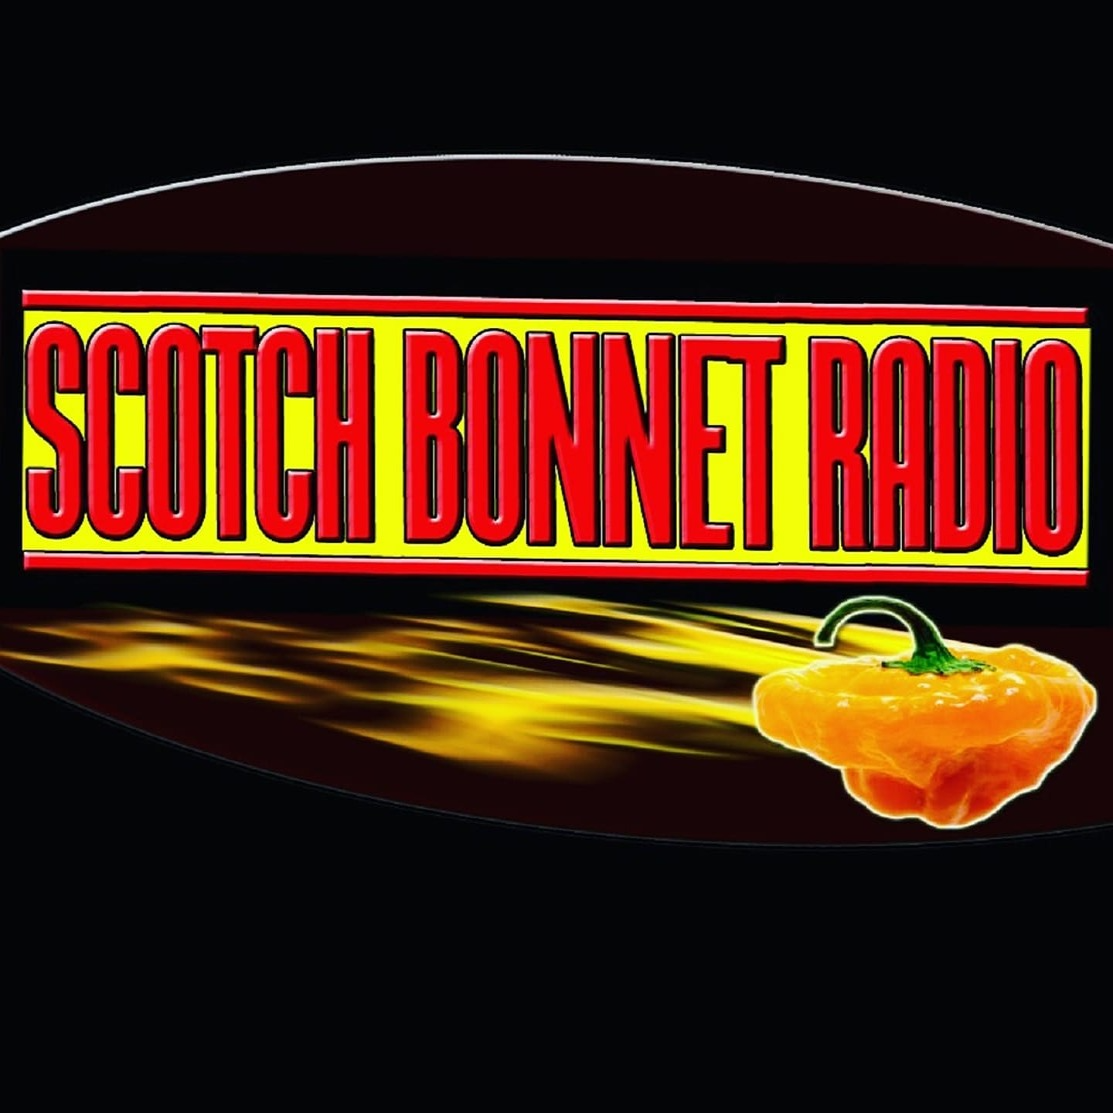 Scotch Bonnet-Radio